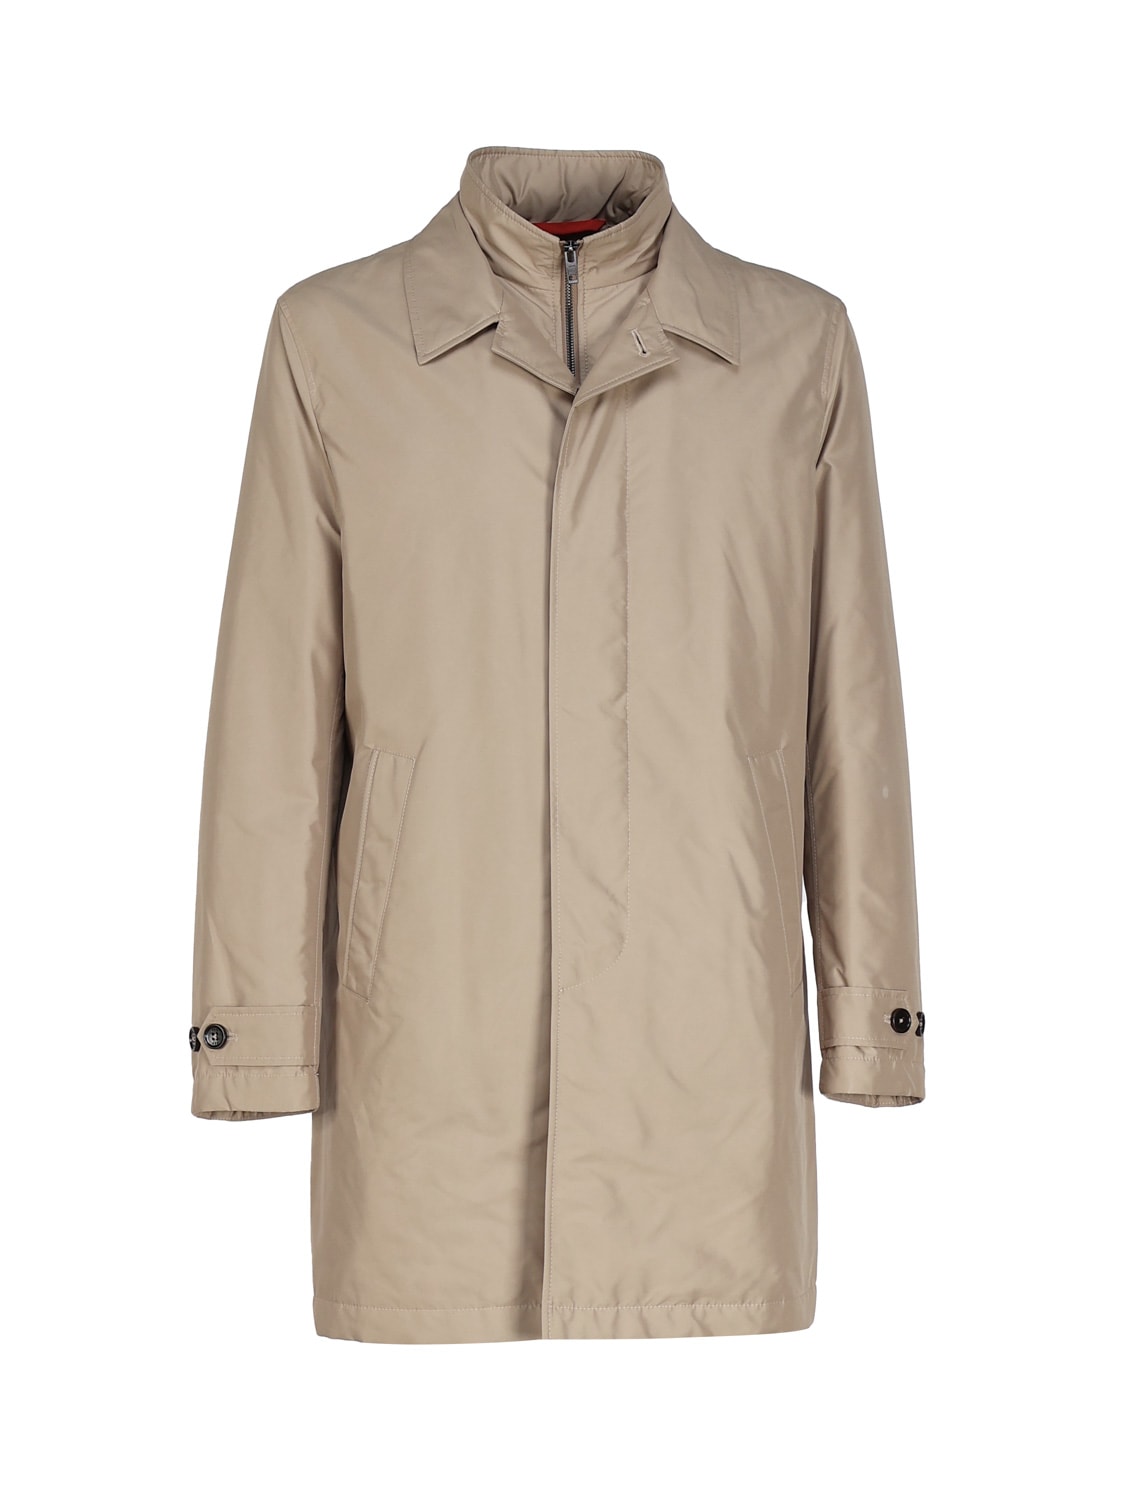 Waterproof Nylon Down Jacket Coat